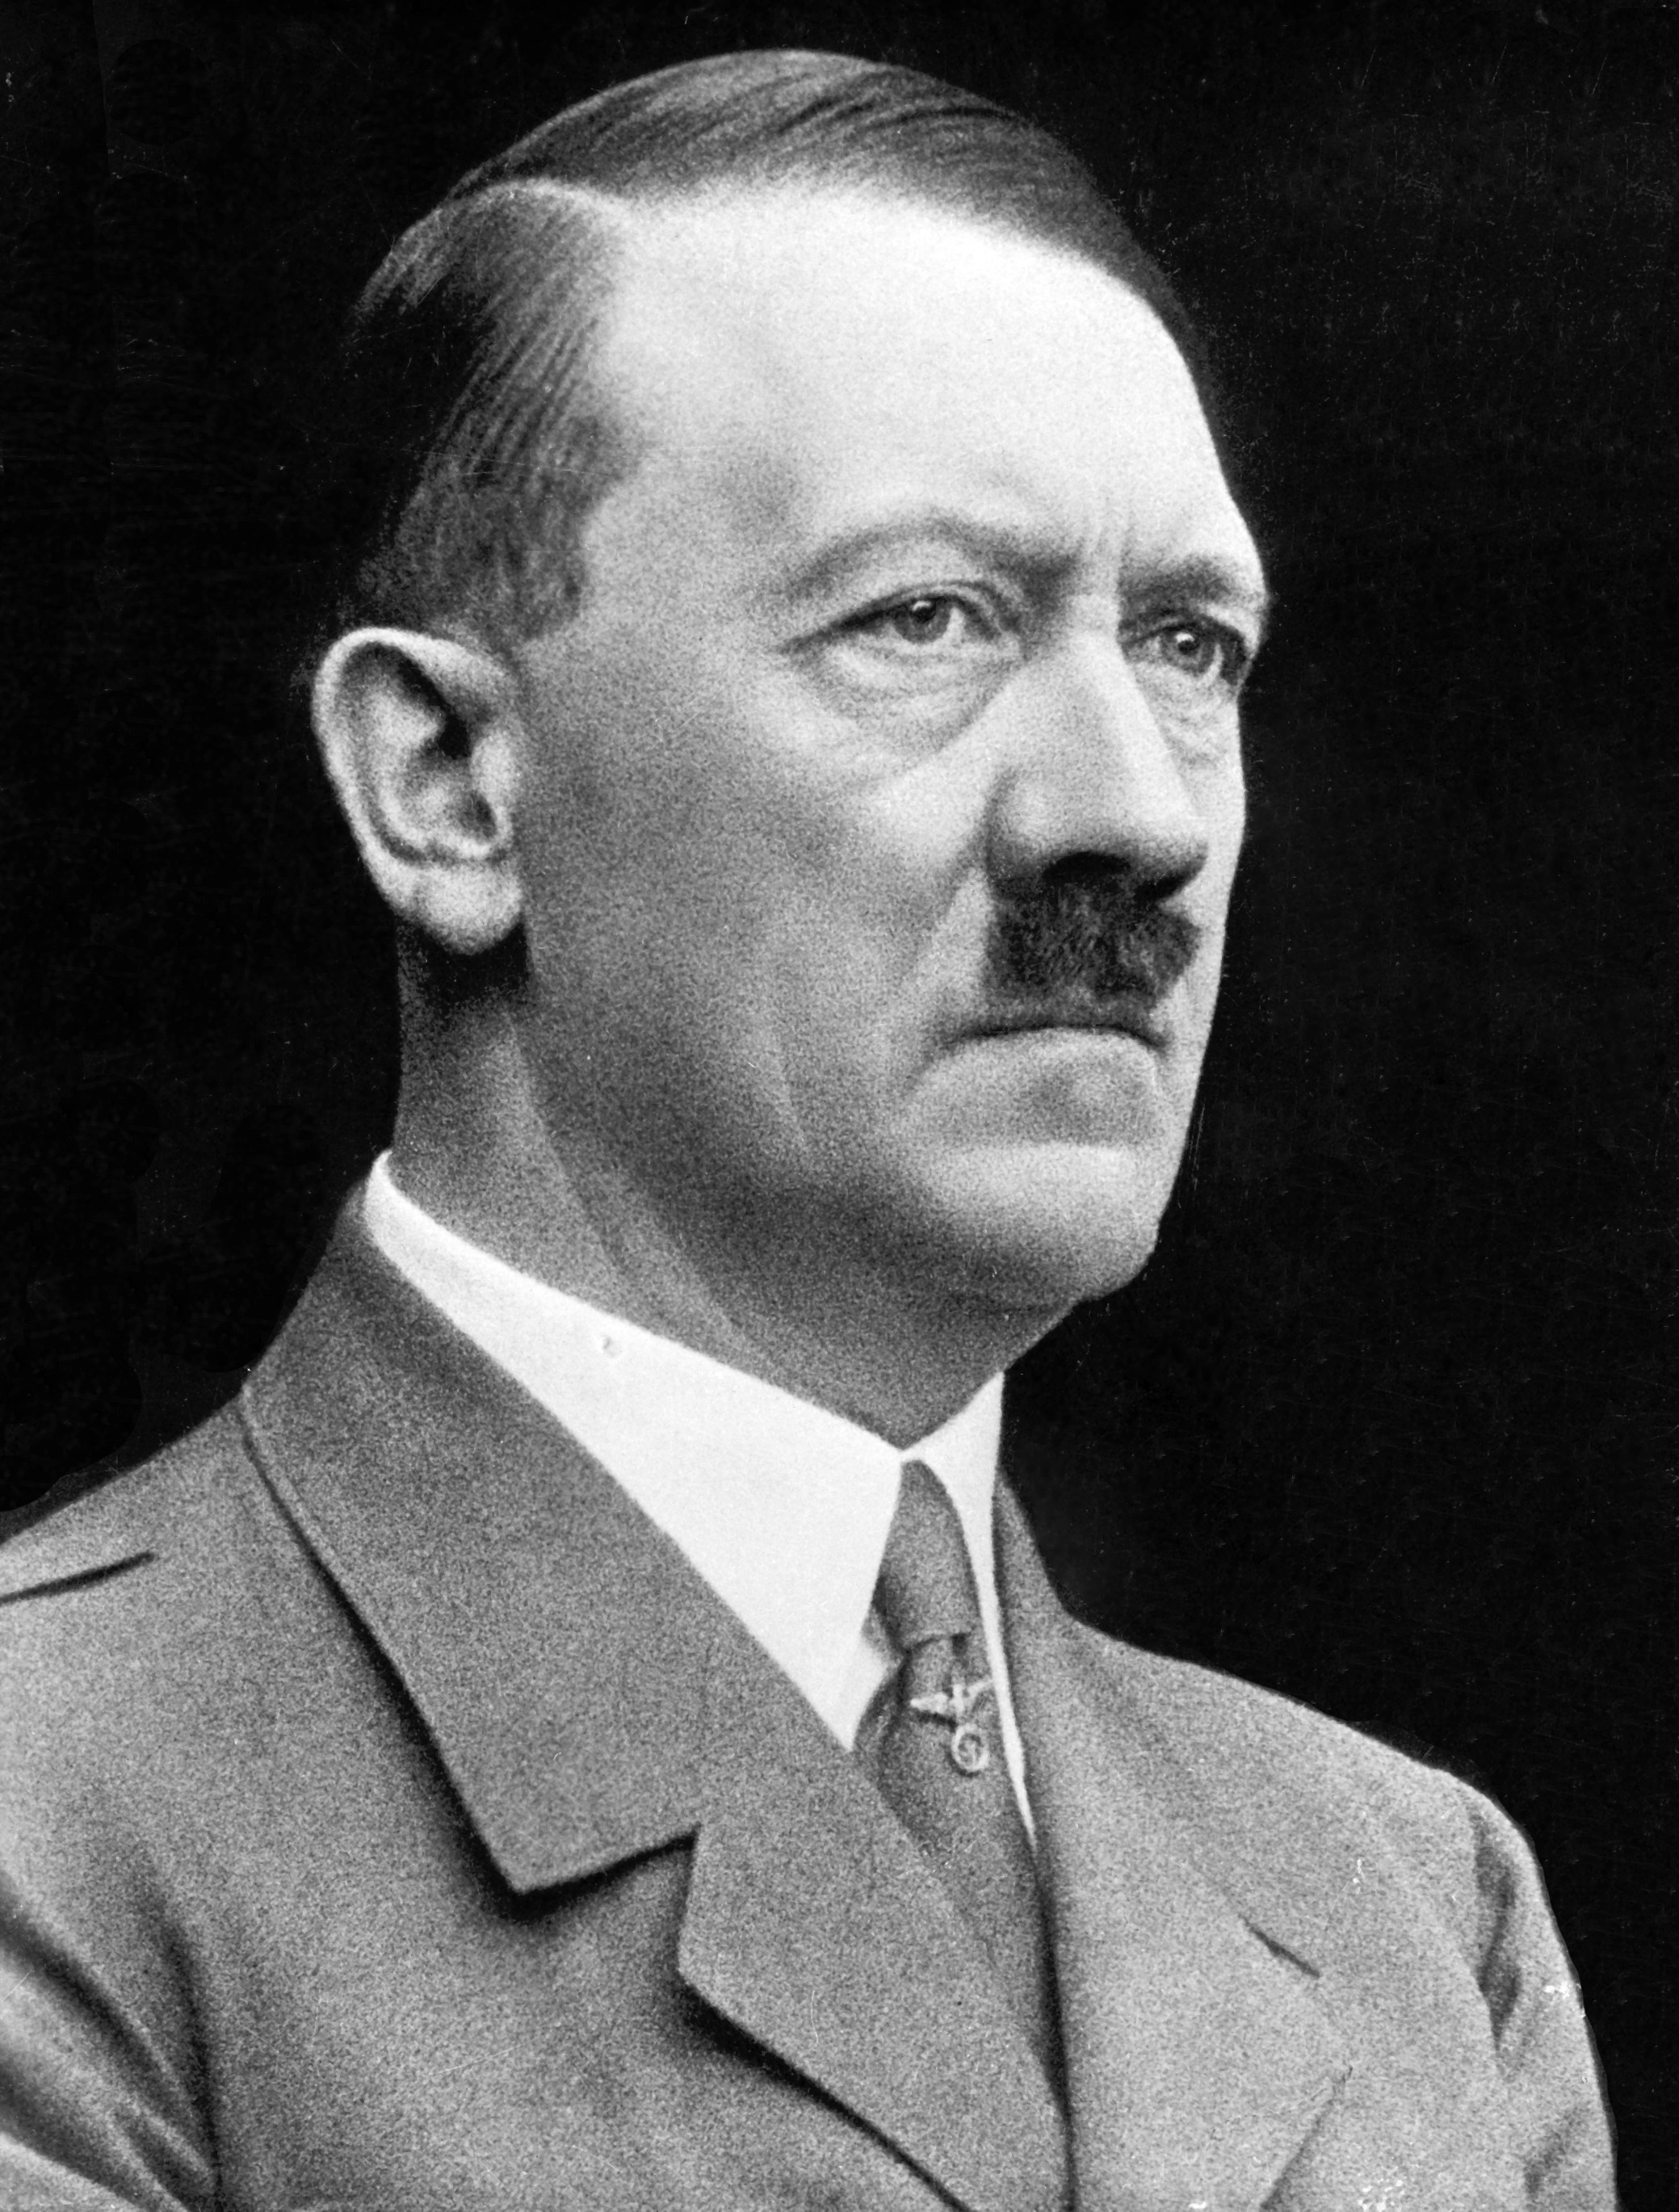 Retrato de Adolf Hitler - Crédito: Bundesarchiv, Bild 183-S33882 / CC BY-SA 3.0 DE / Wikimedia Commons